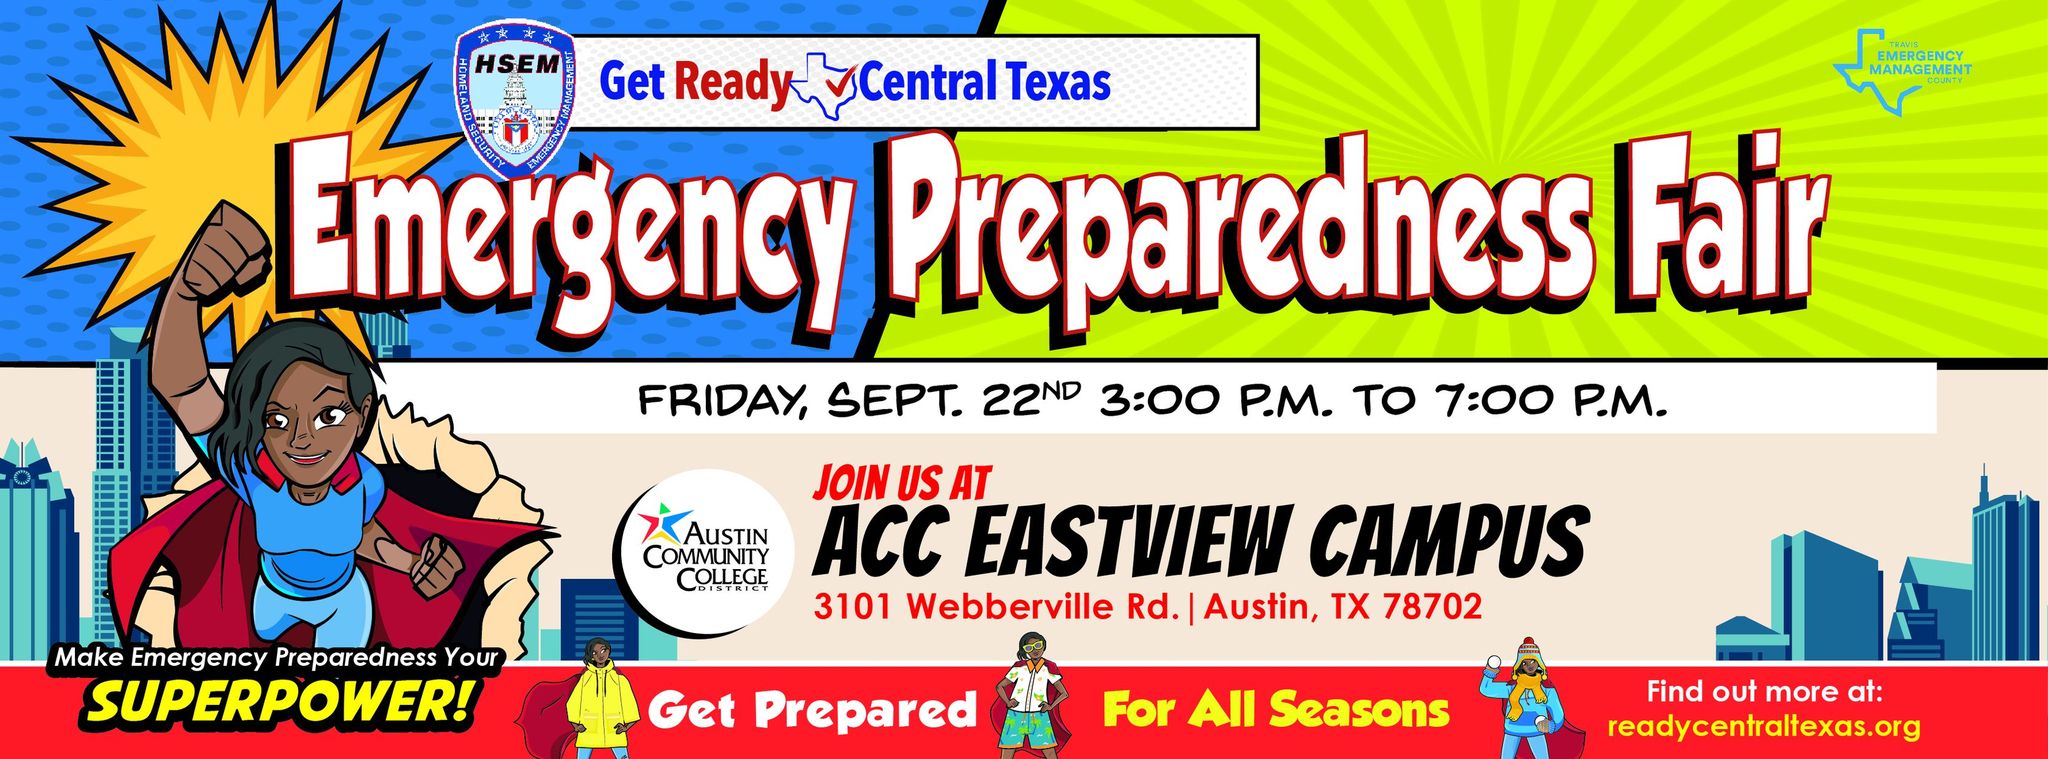 get ready central texas emergency preparedness fair